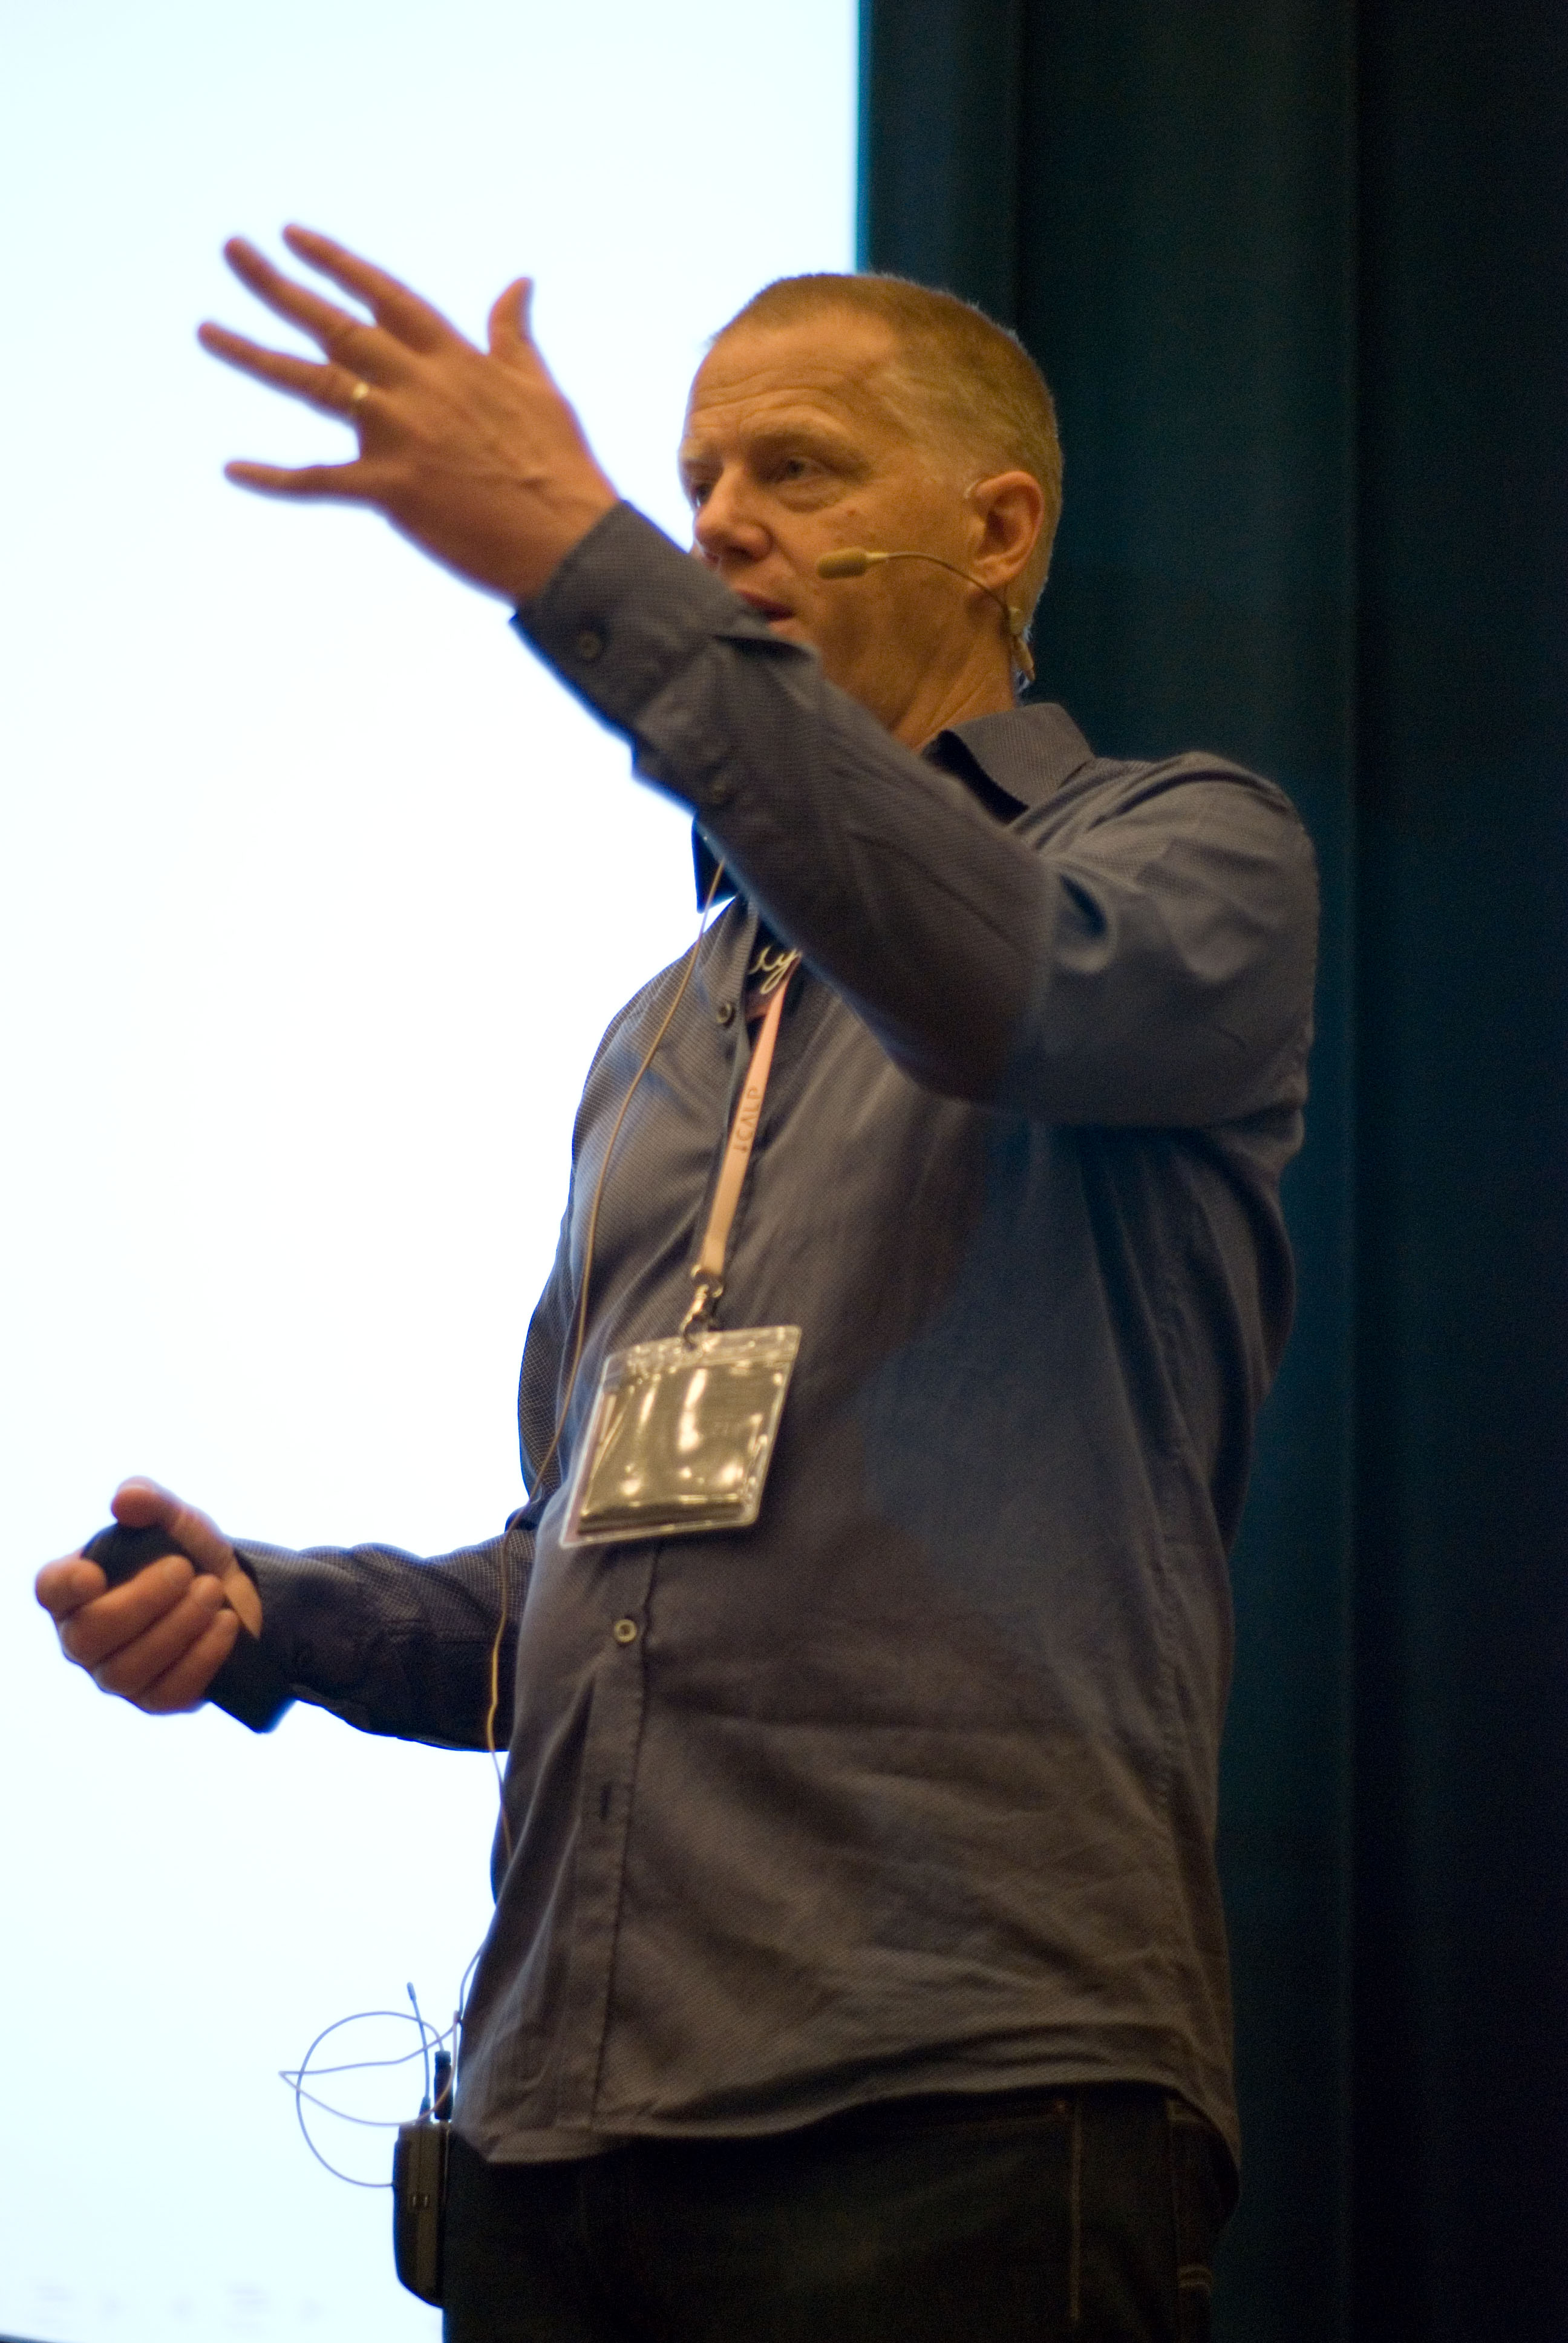 Mikkel Thorup's talk